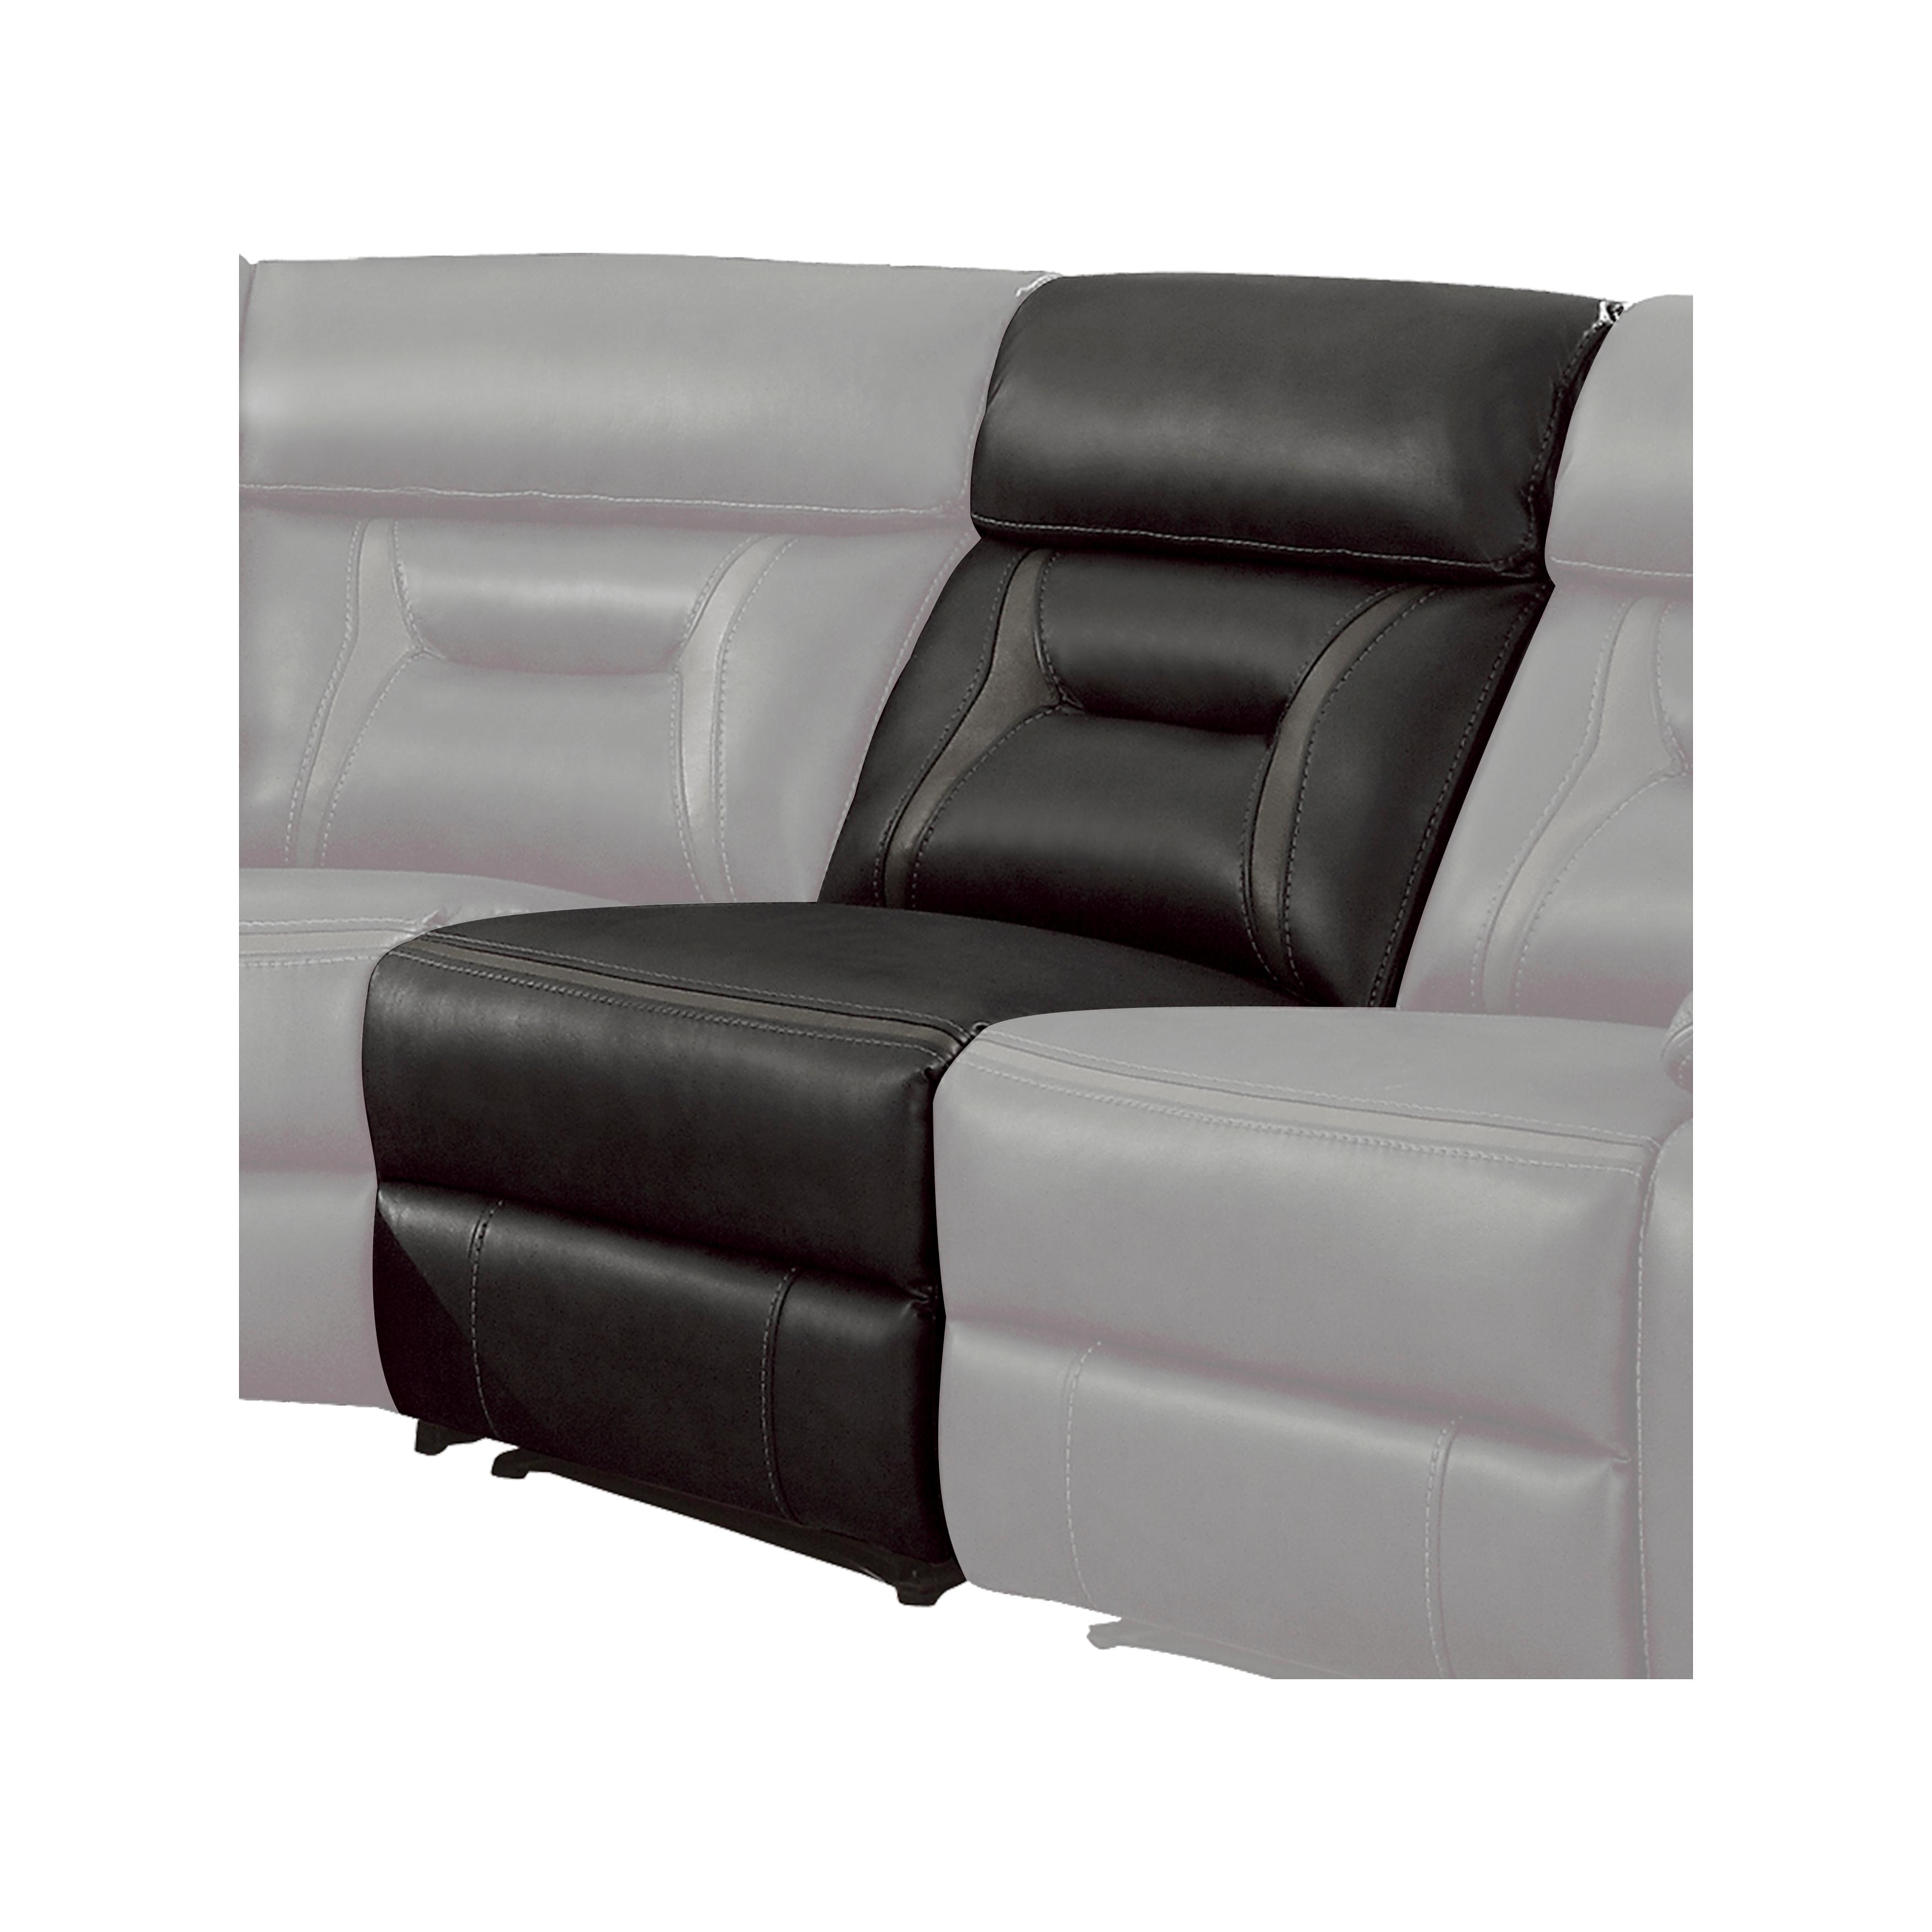 Modern Power Armless Reclining Chair 8229DG-ARPW Amite 8229DG-ARPW in Dark Gray Faux Leather